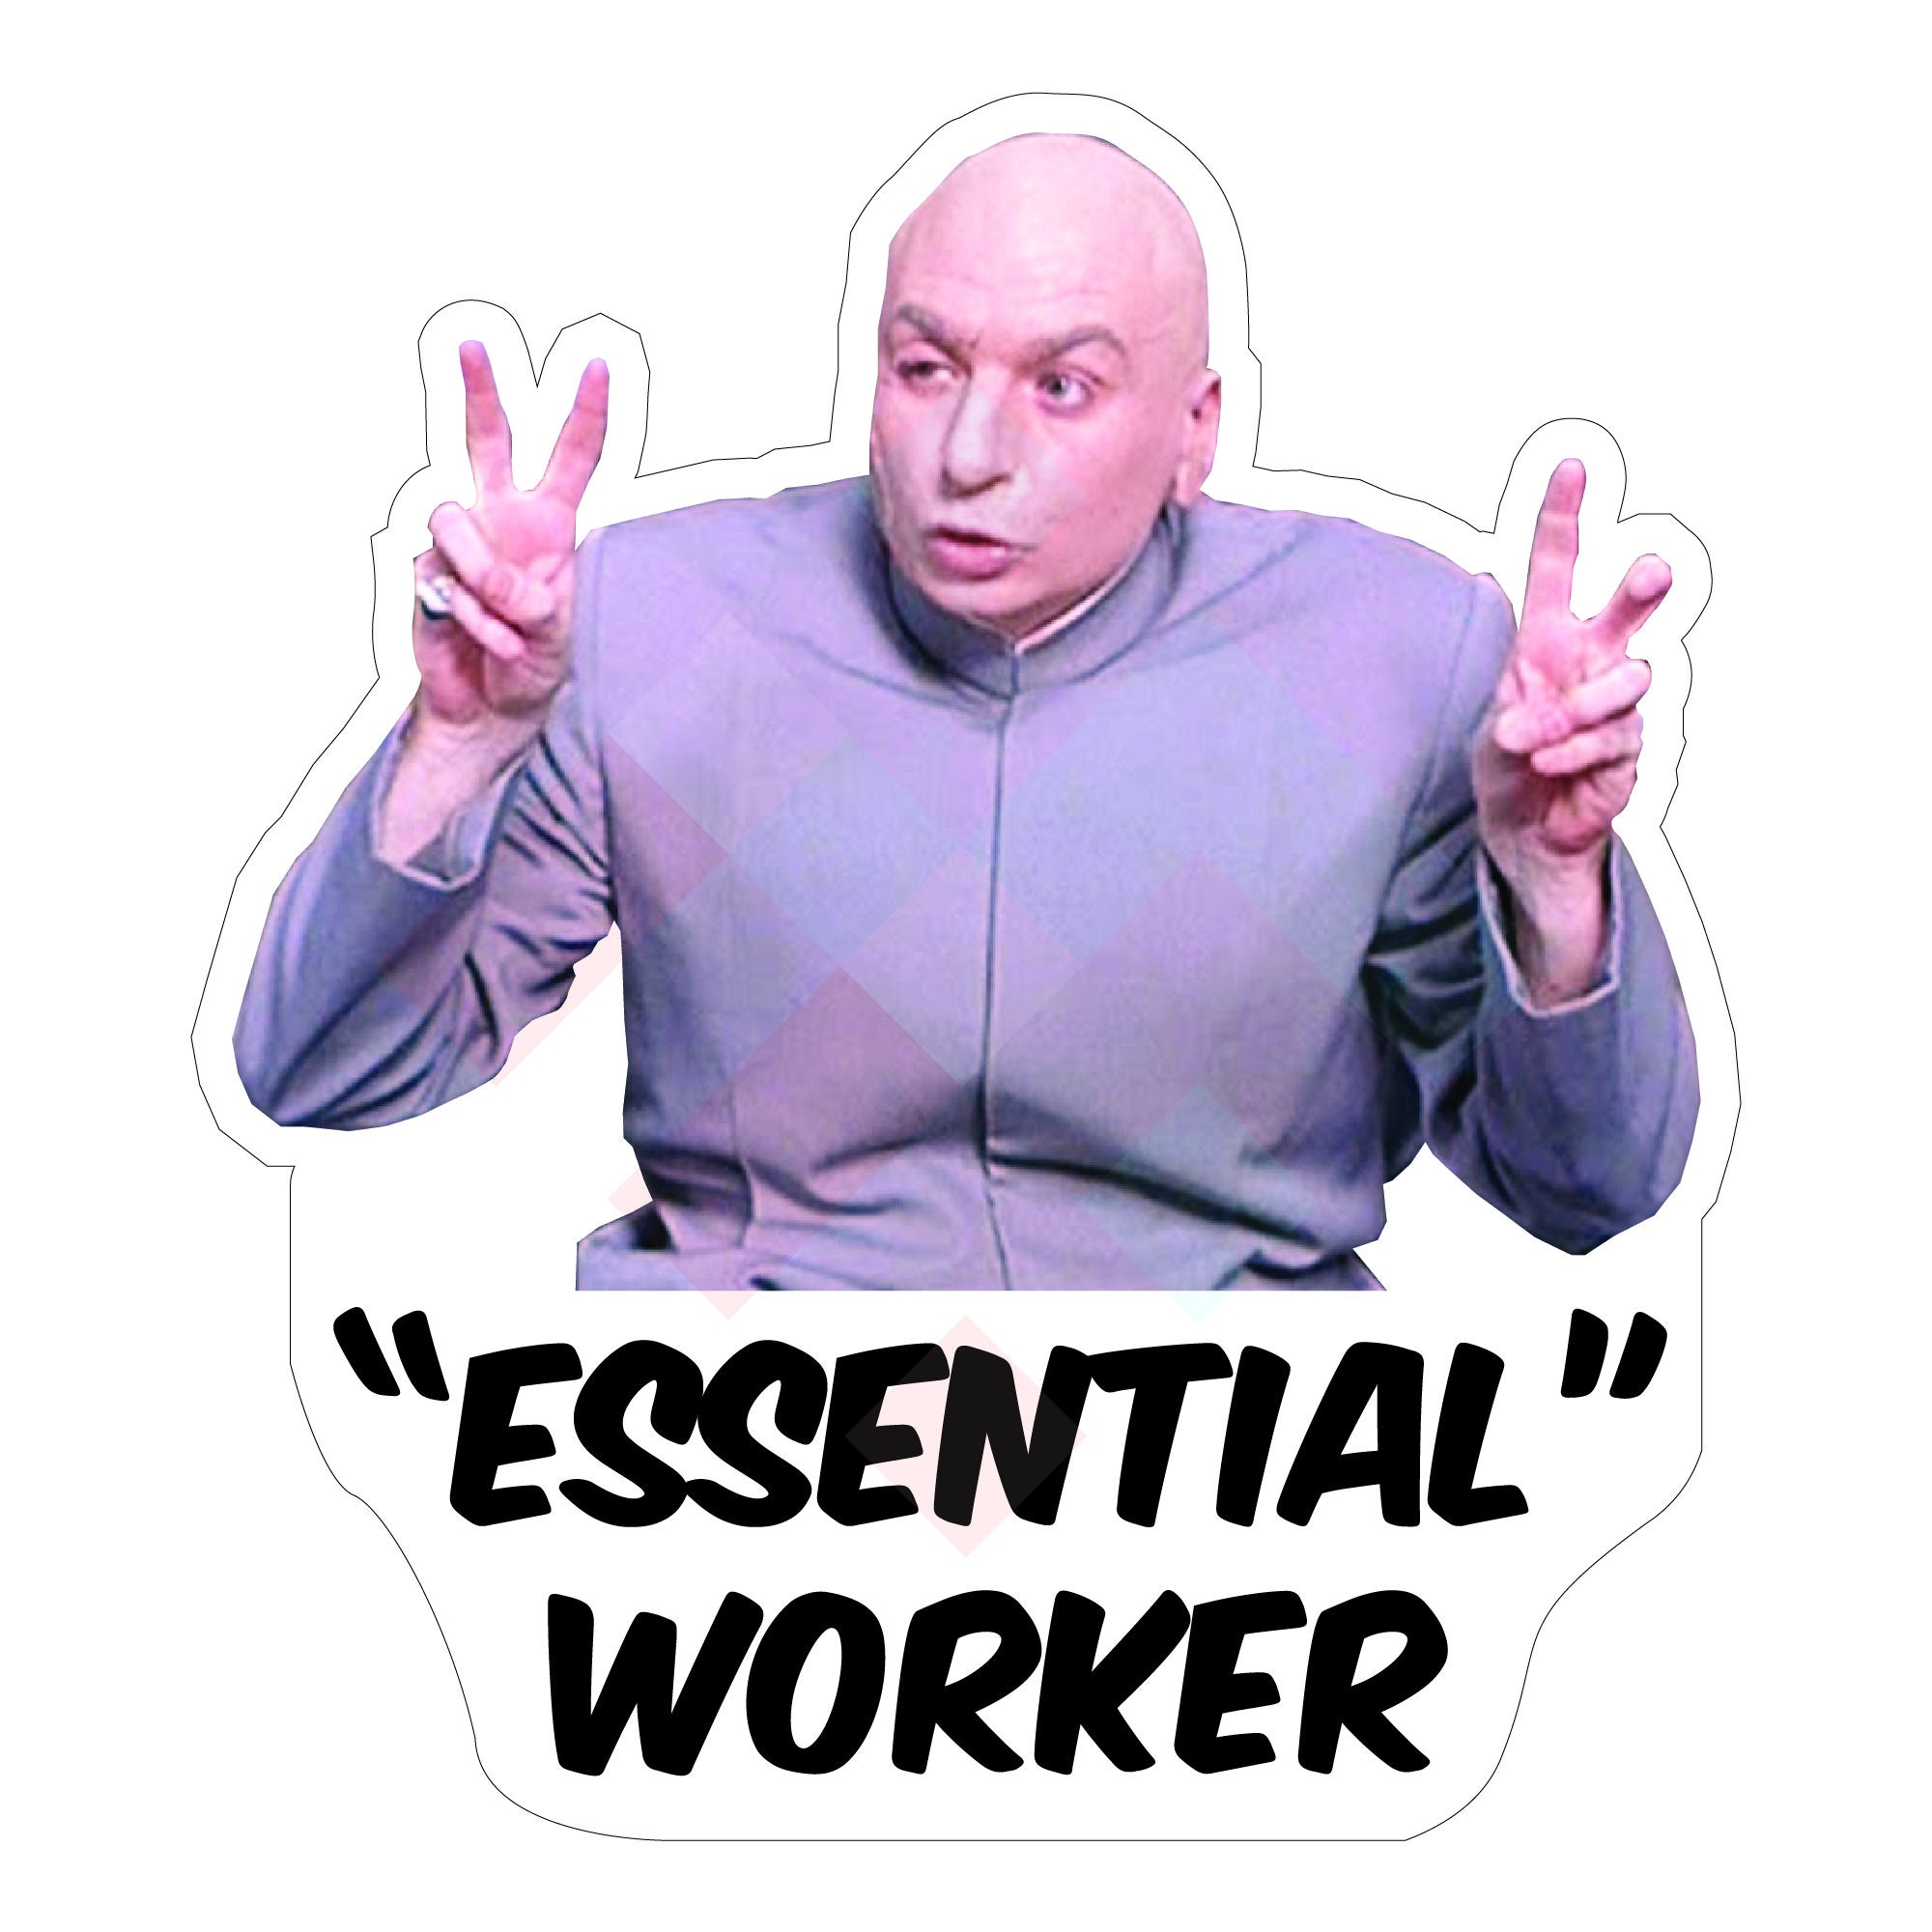 Essential Worker Dr Evil Air quote Meme Sticker | Etsy